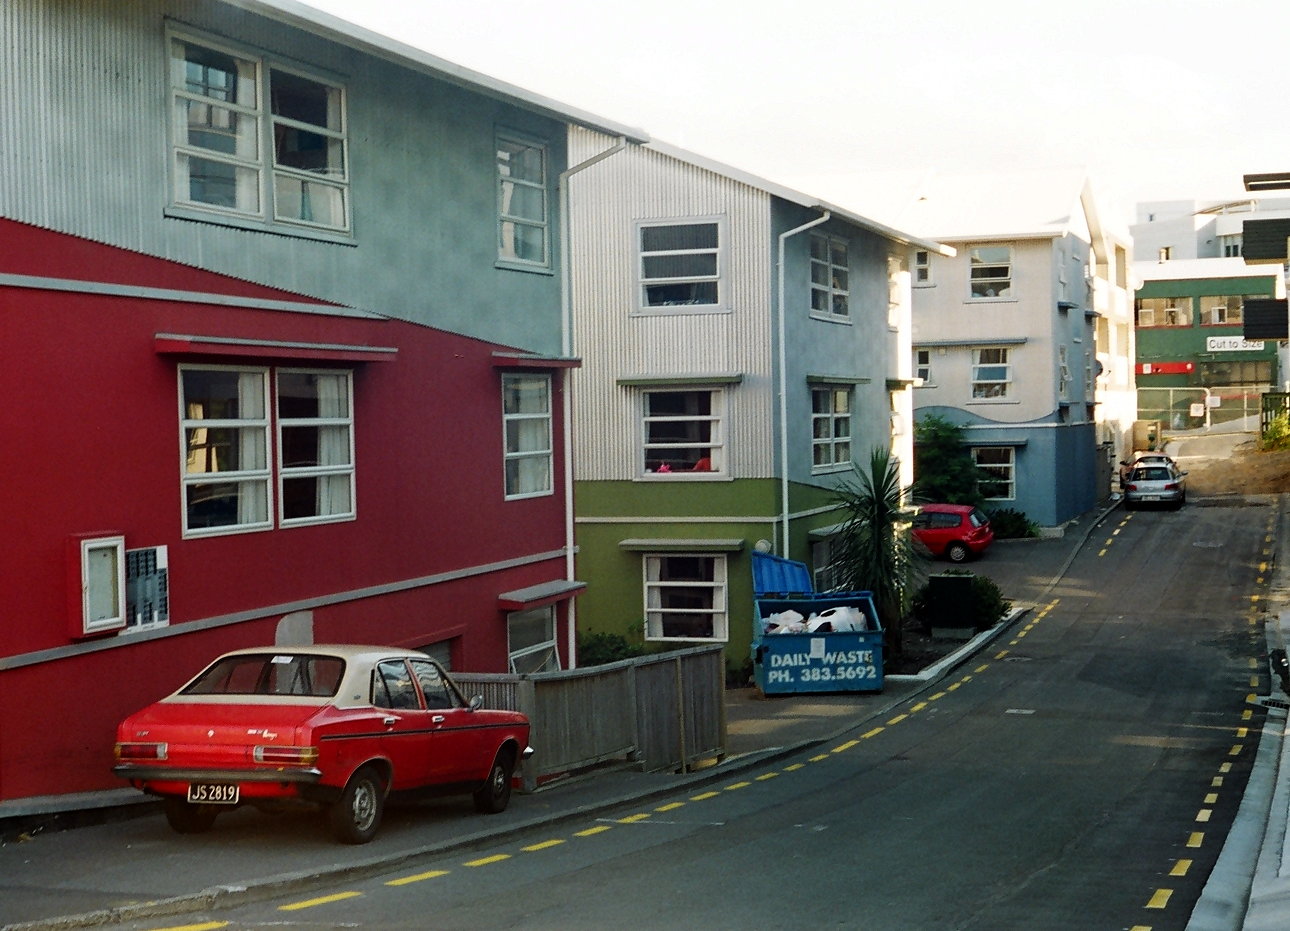 fotka / image modern zstavba
, prvn dvojrole film prohnan Yashicou M - Wellington, NZ